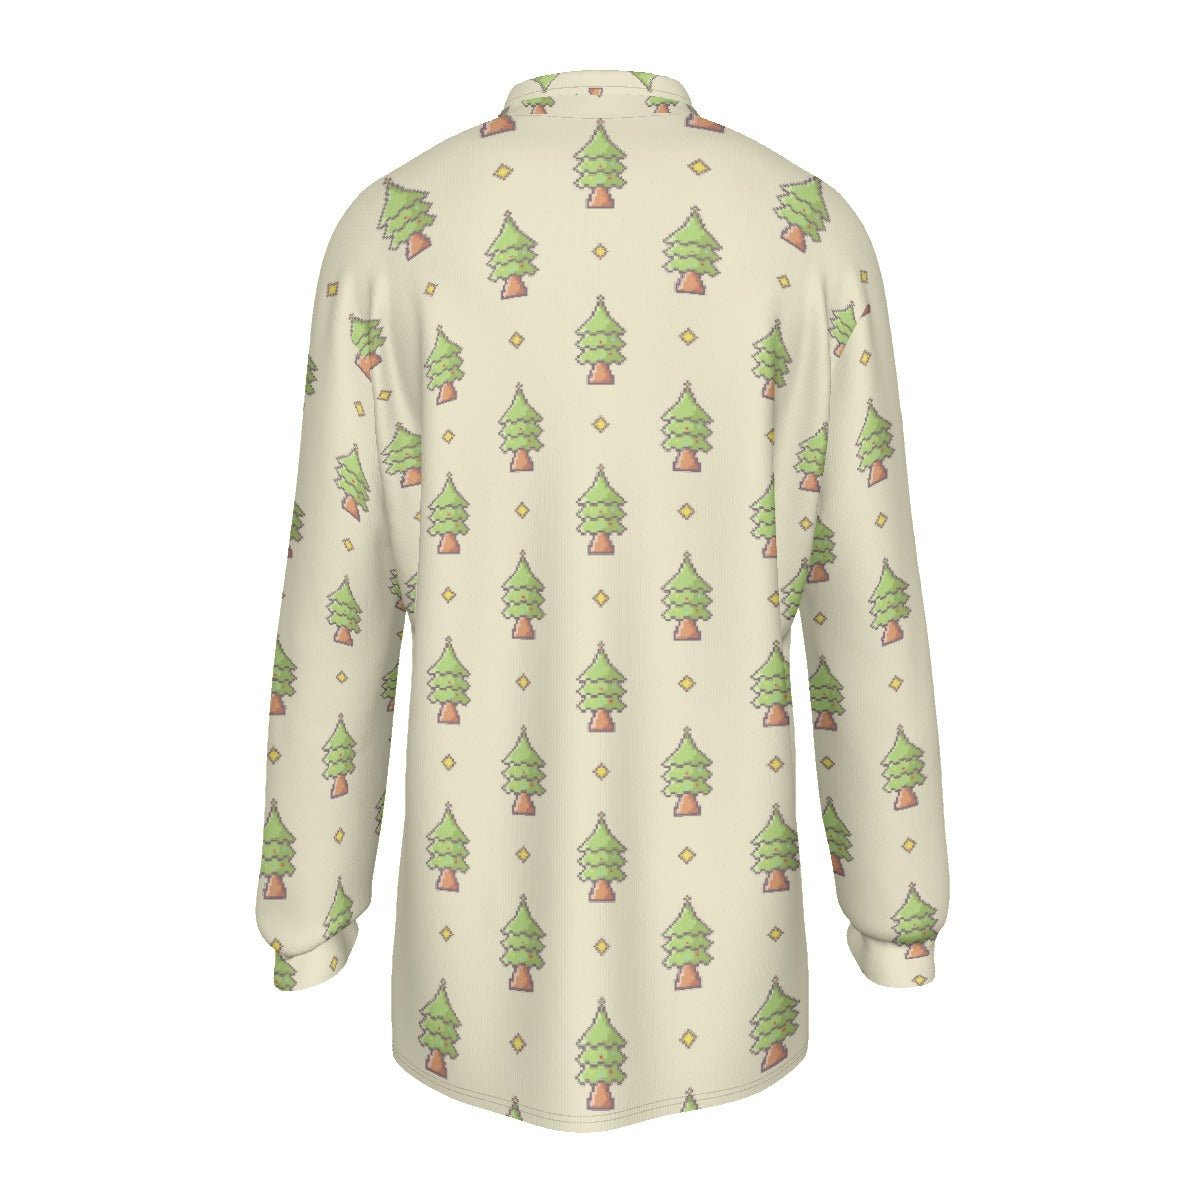 Men's Long Sleeve Christmas Polo Shirt - 16-Bit Christmas Trees - Festive Style